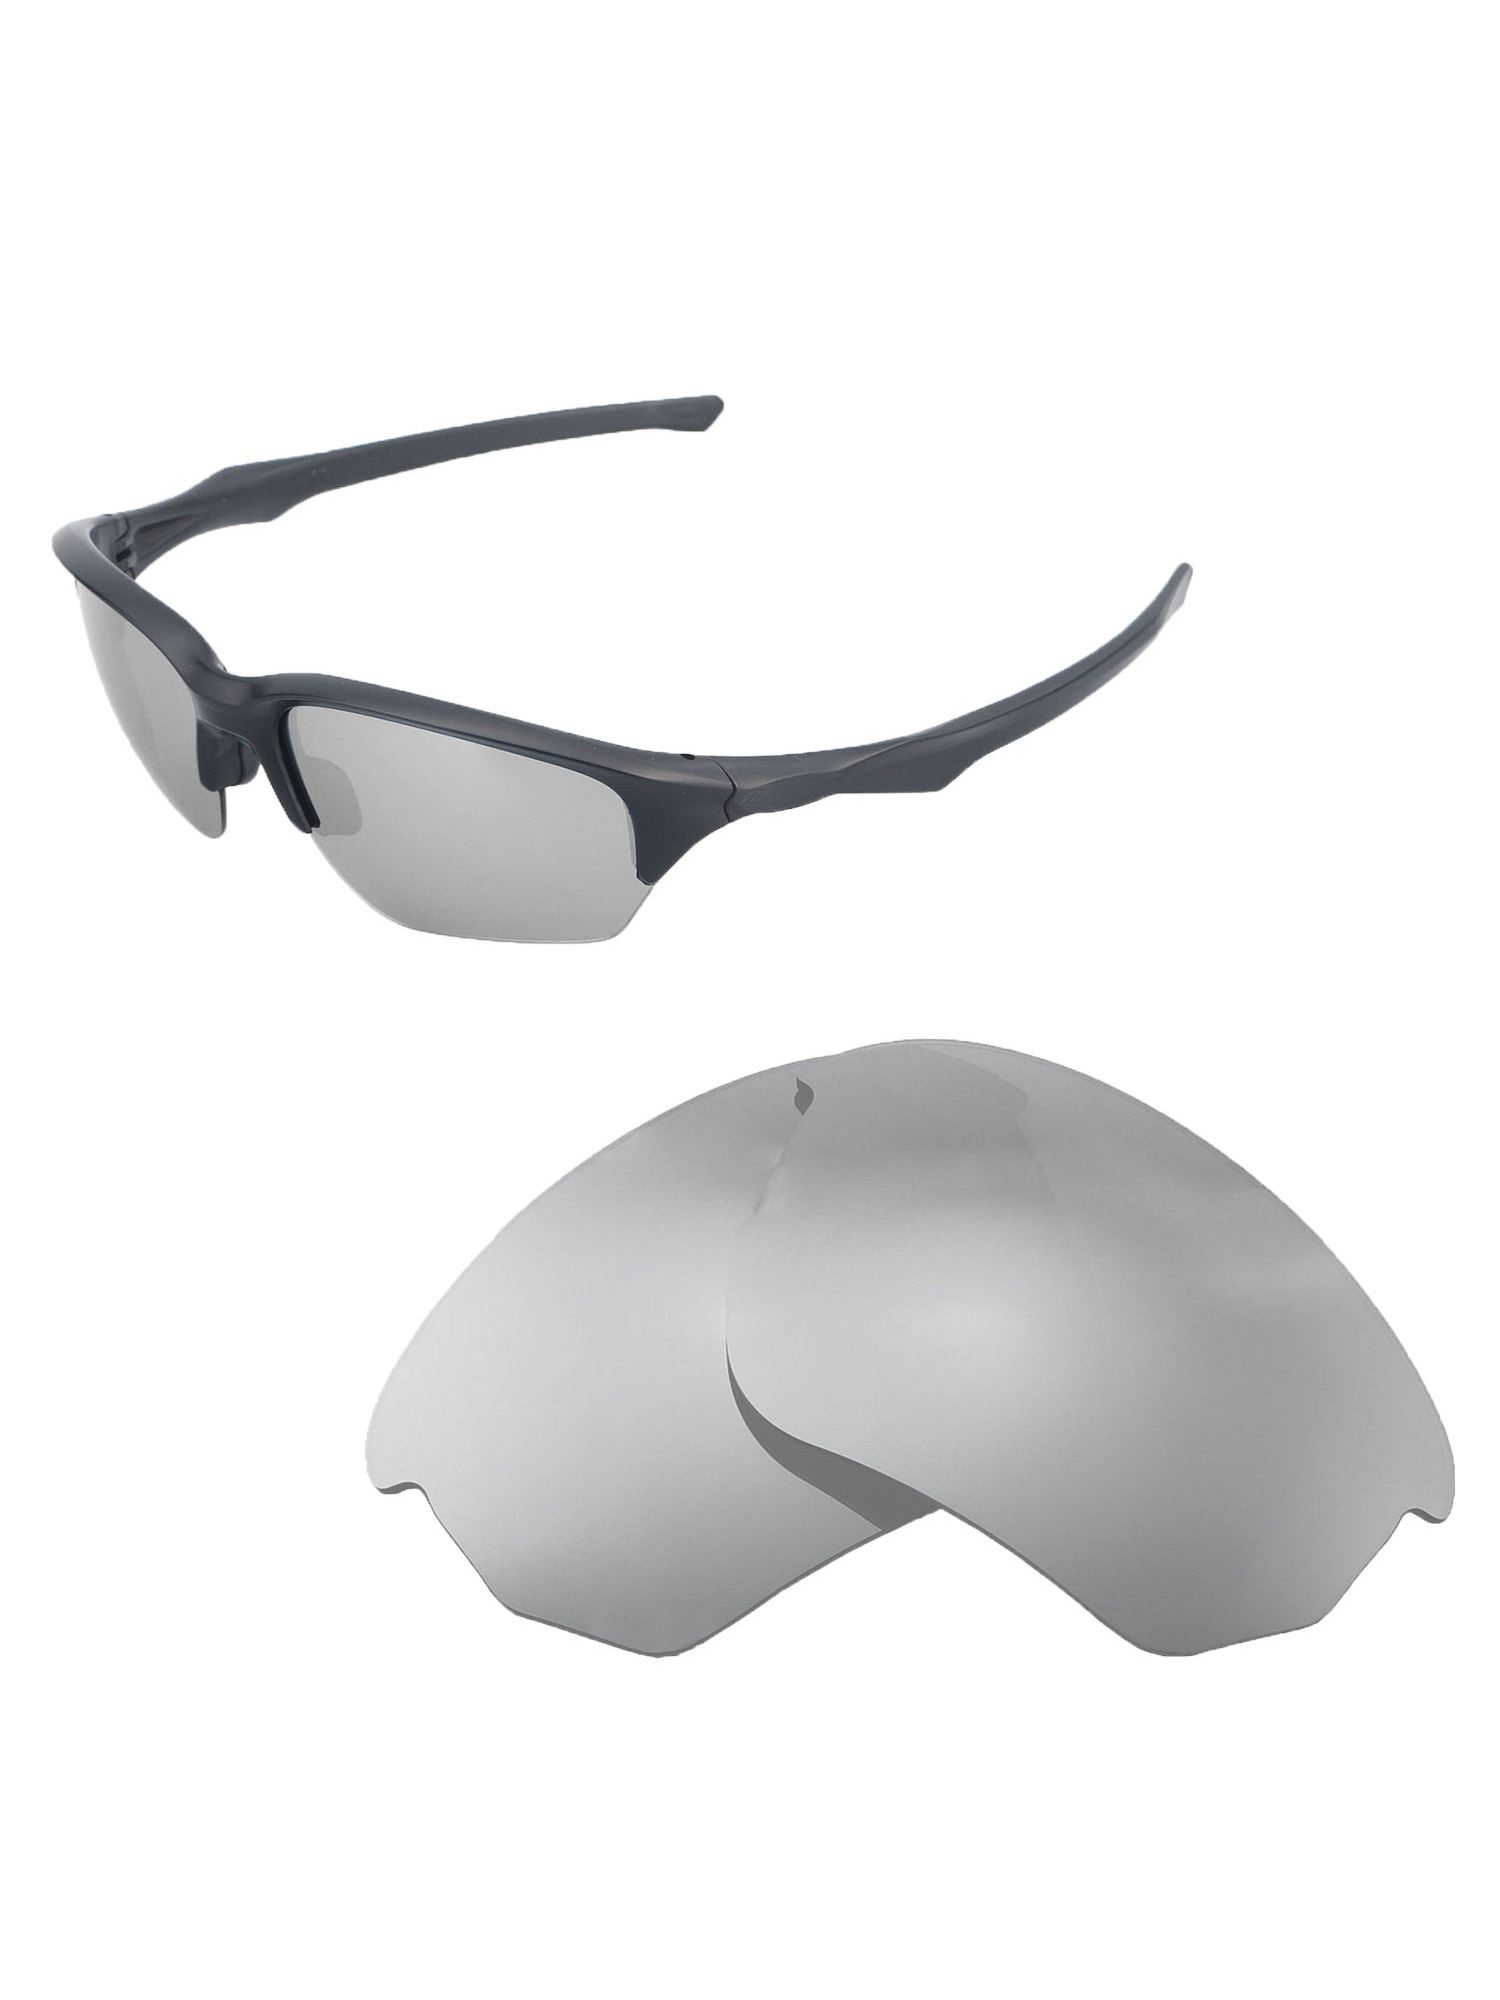 Walleva Titanium Polarized Replacement Lenses for Oakley Flak Beta Sunglasses - image 1 of 6